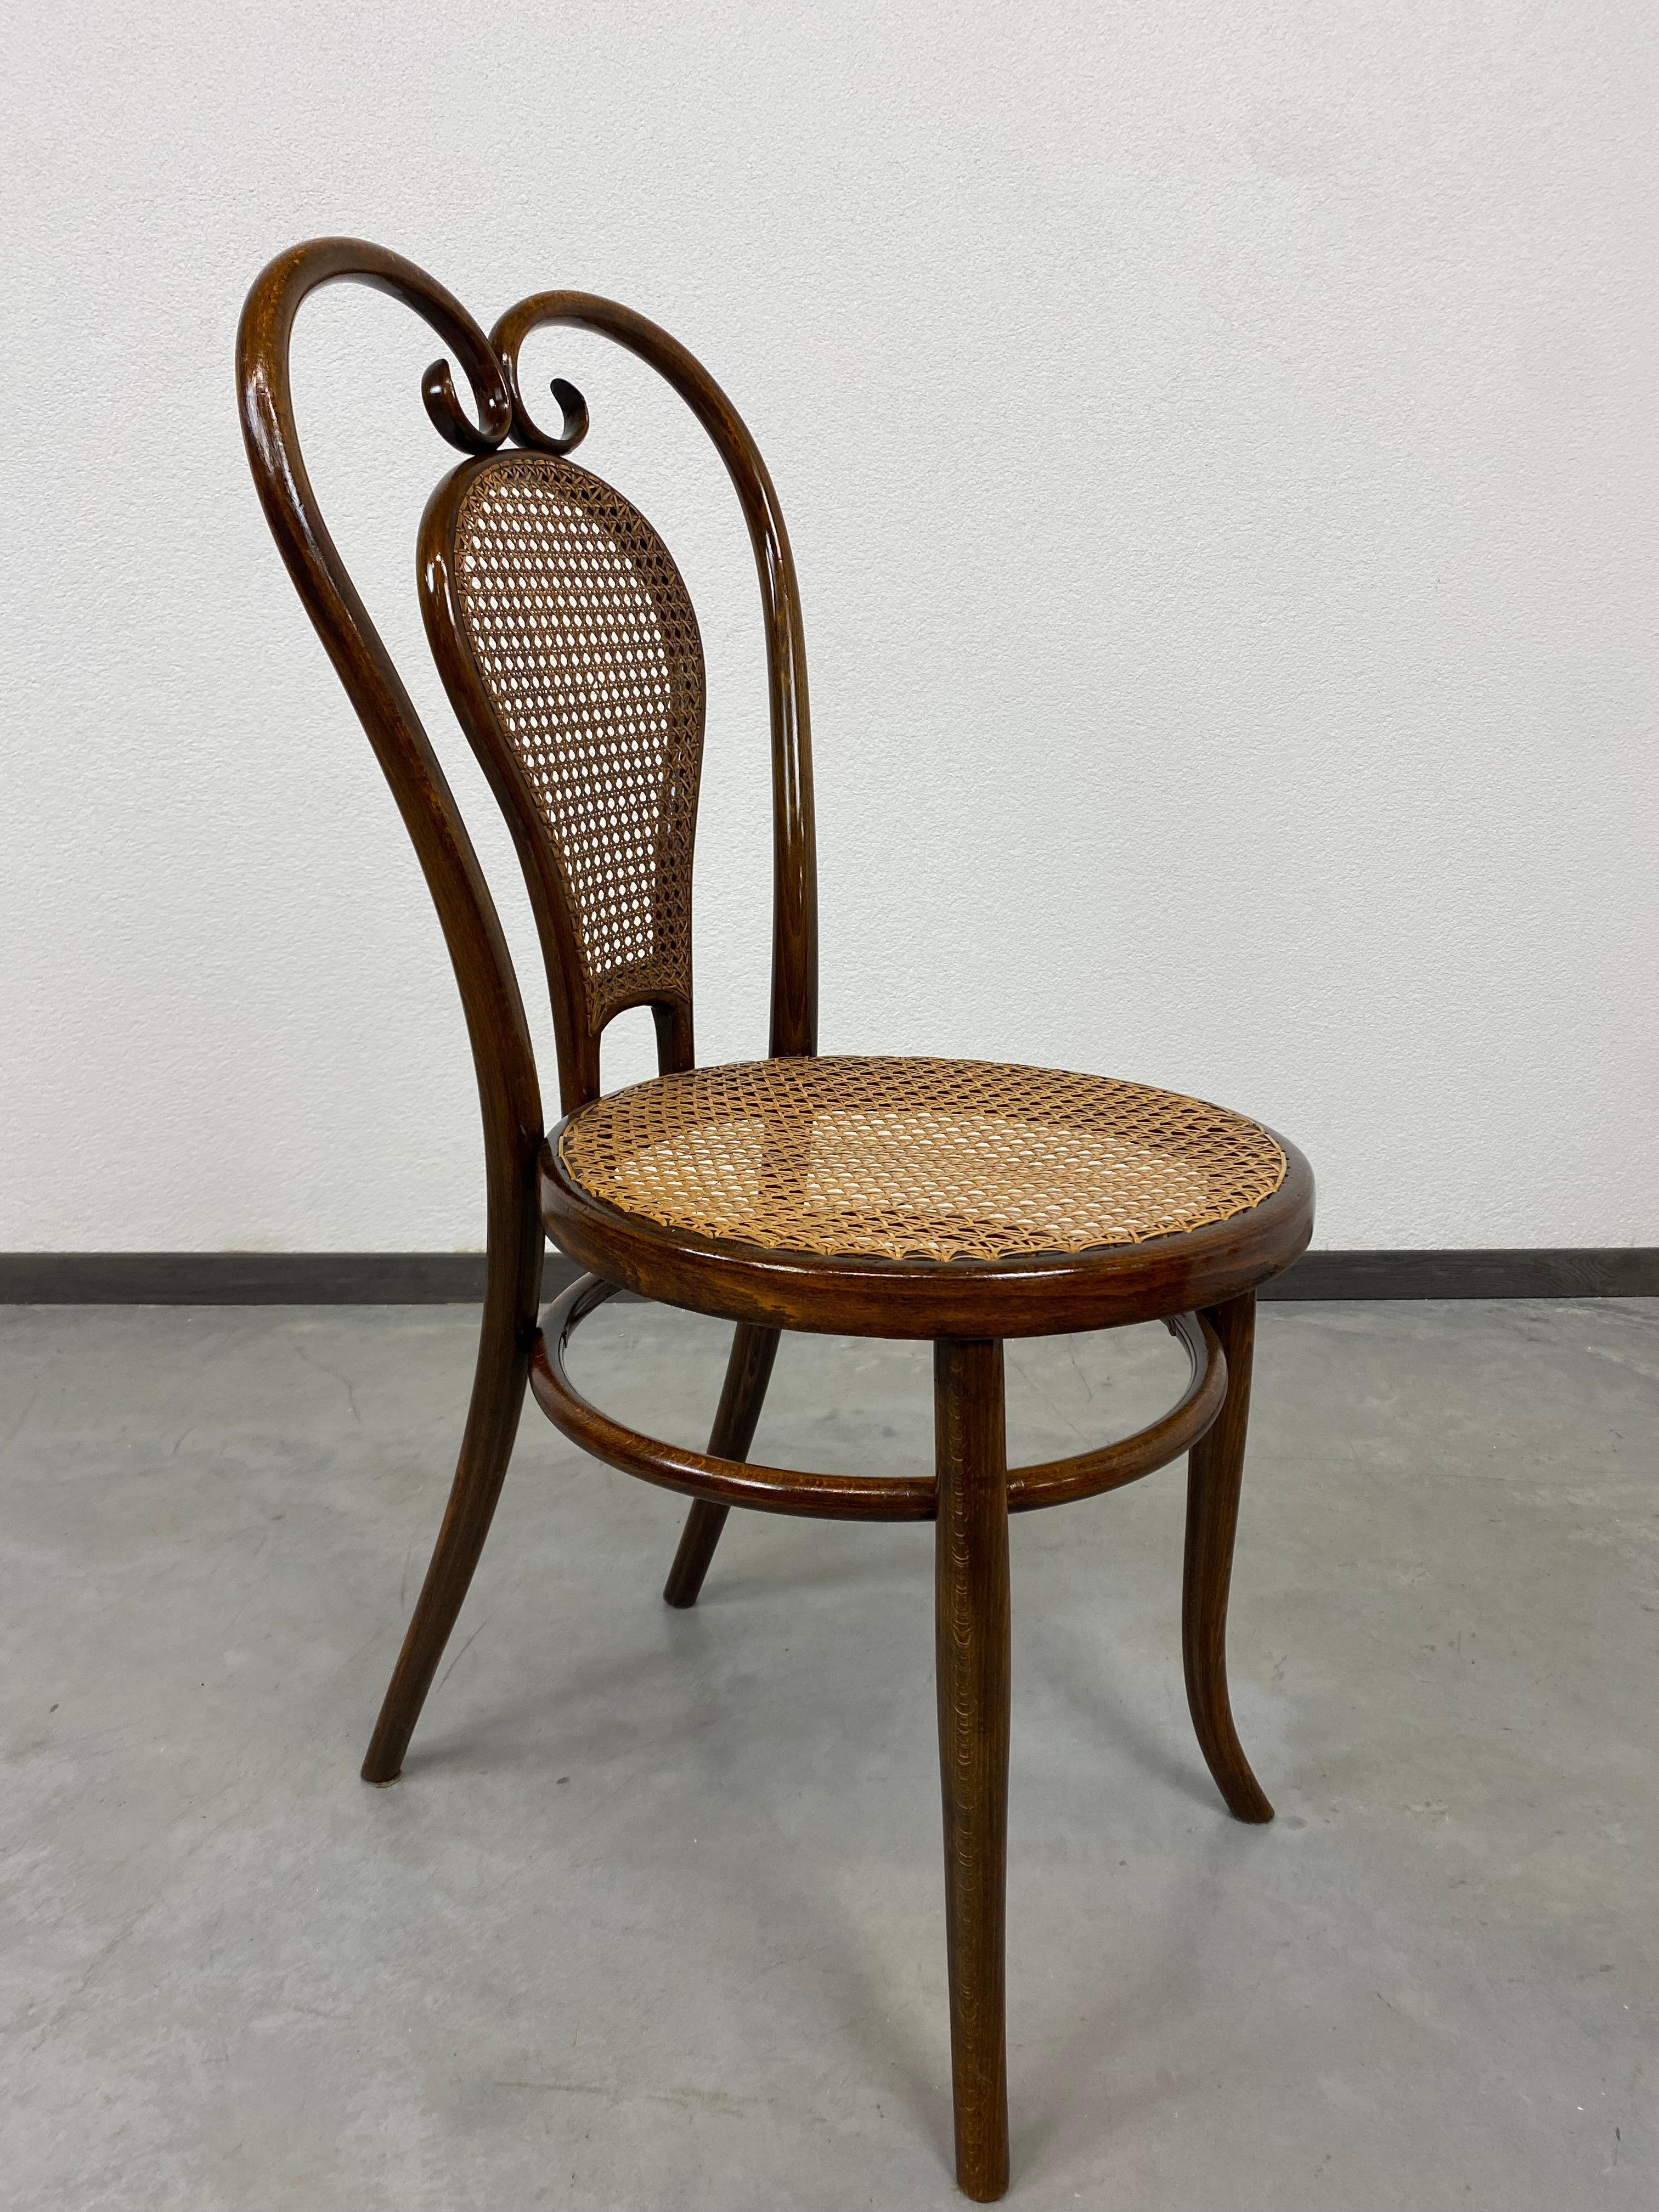 Fischel dining chair no.42 in very good oriignal condition.